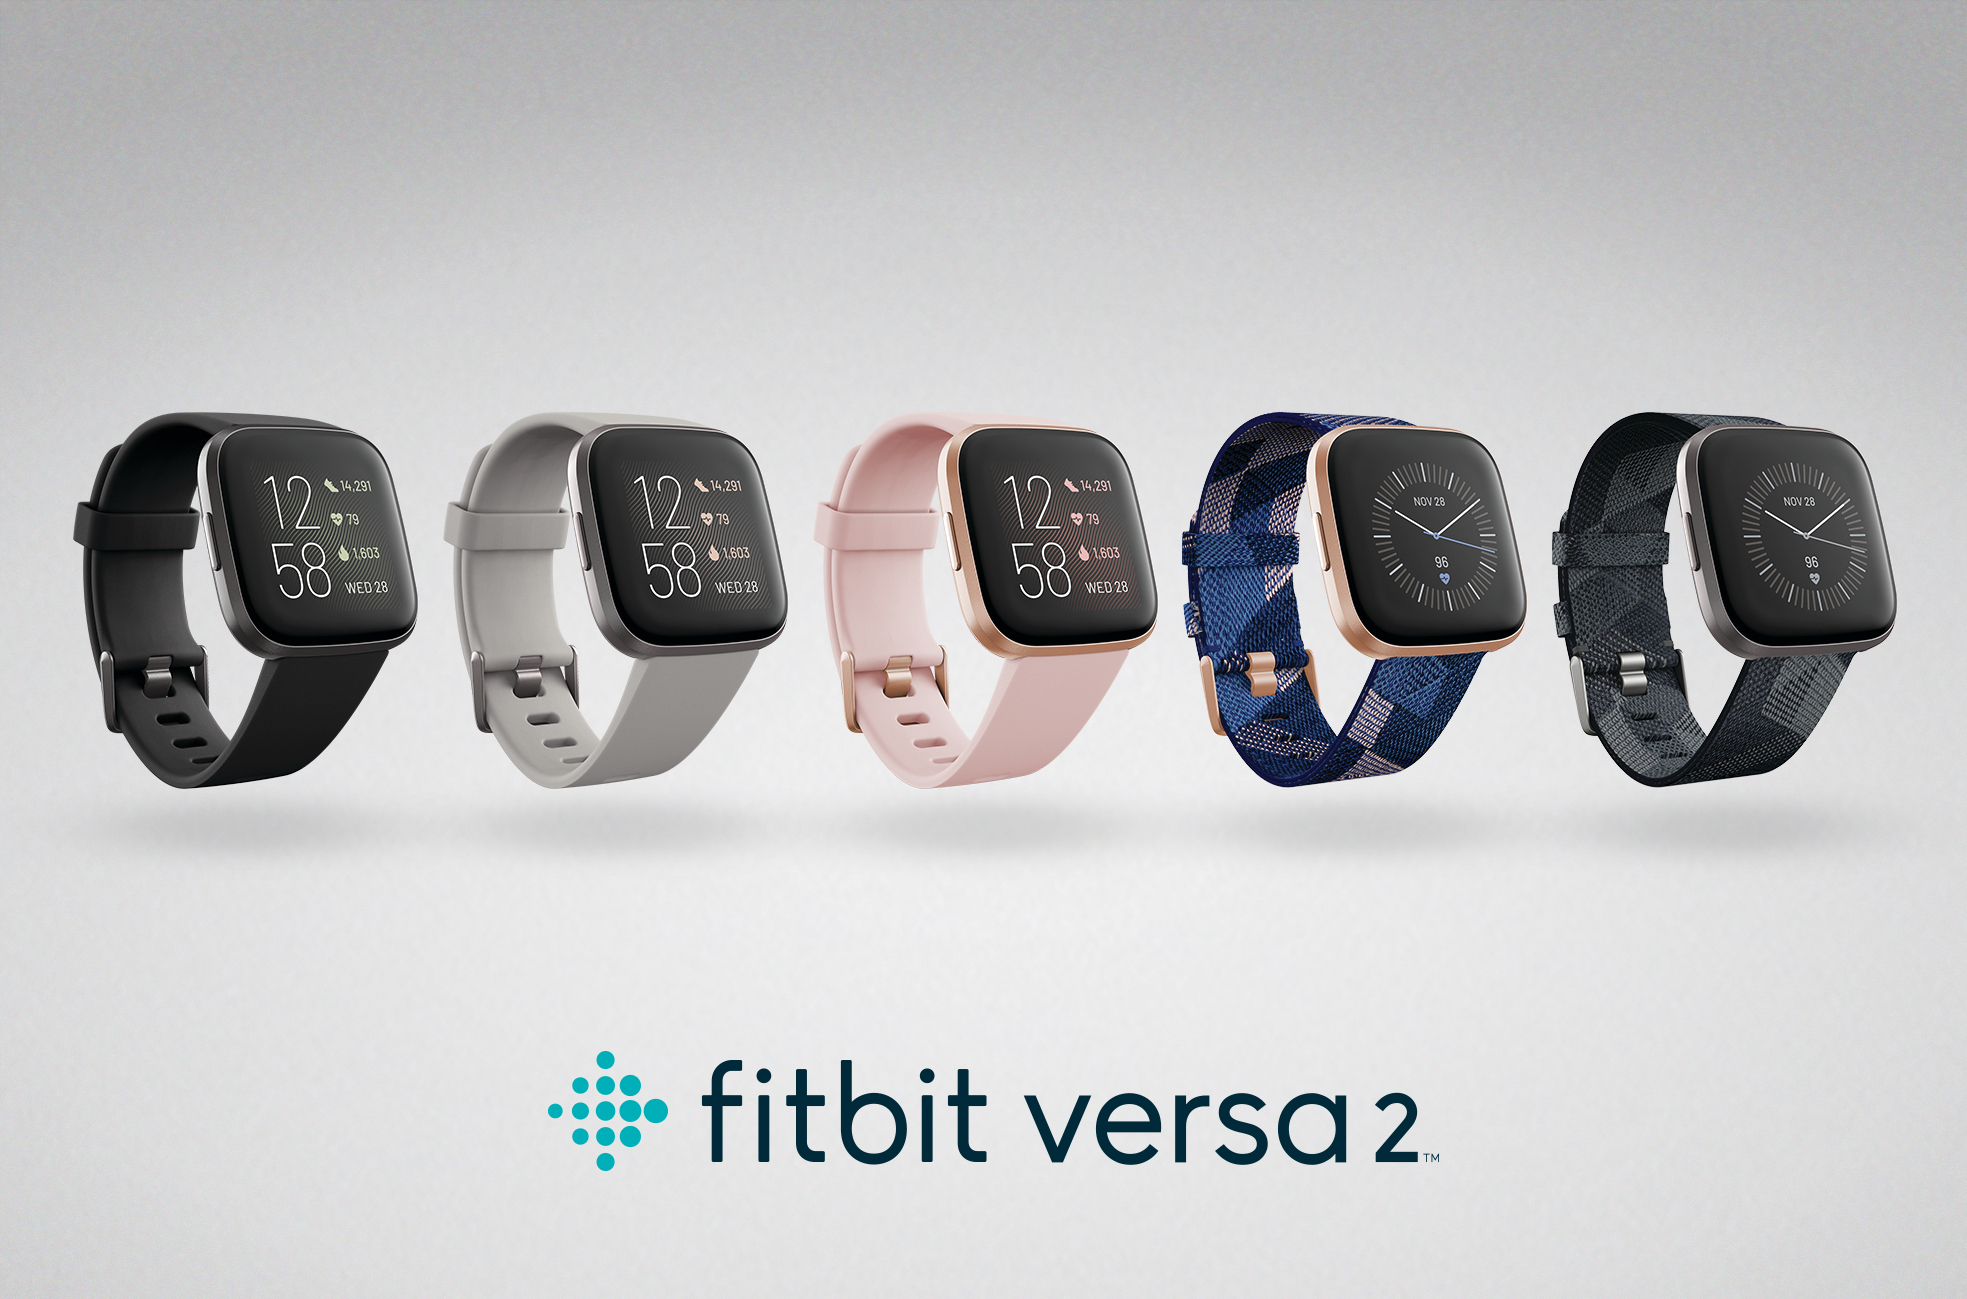 fitbit versa 2 health & fitness smartwatch